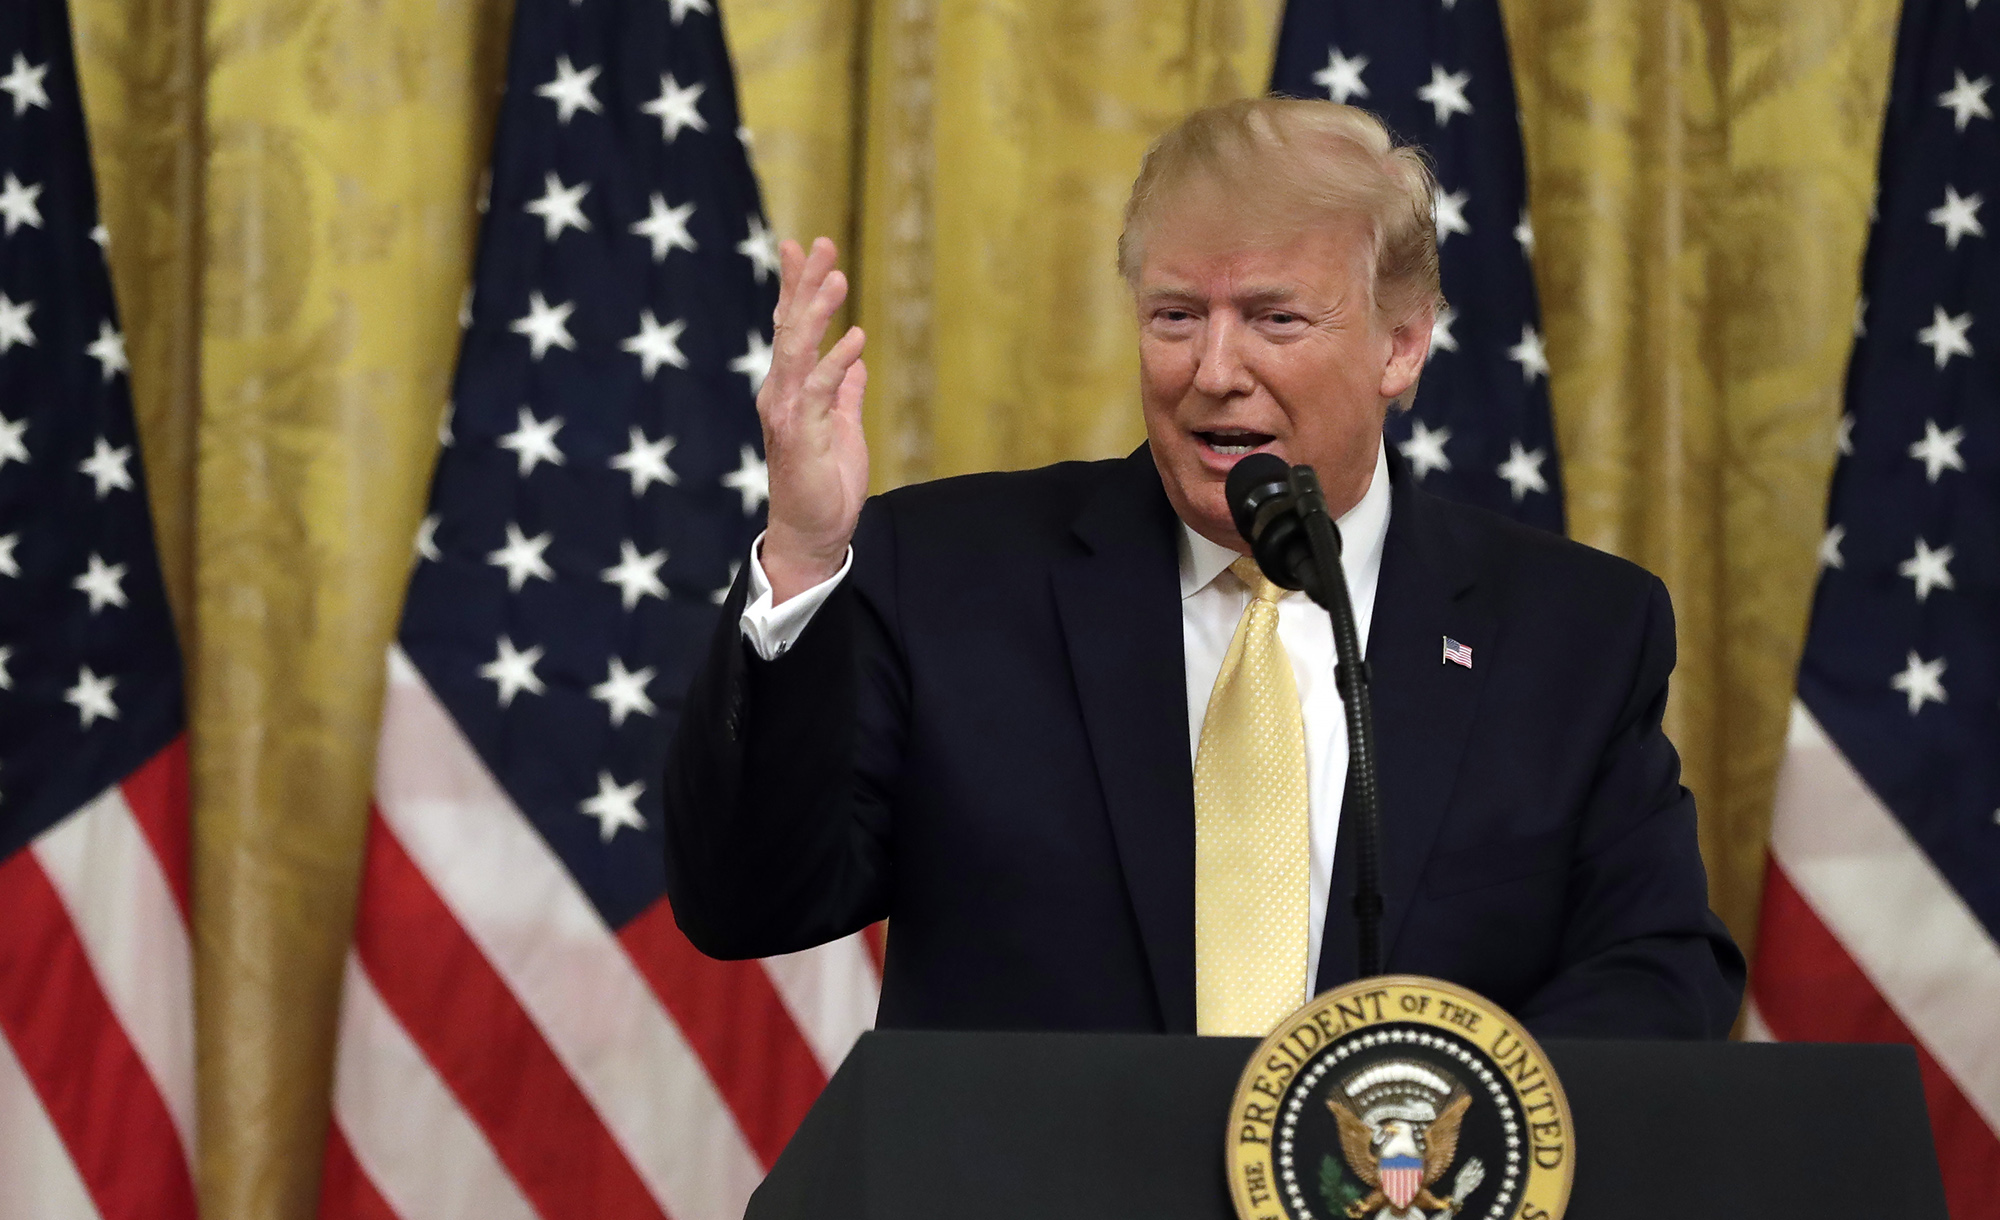 Trump speaks during a “Presidential Social Media Summit” in Washington on July 11. 